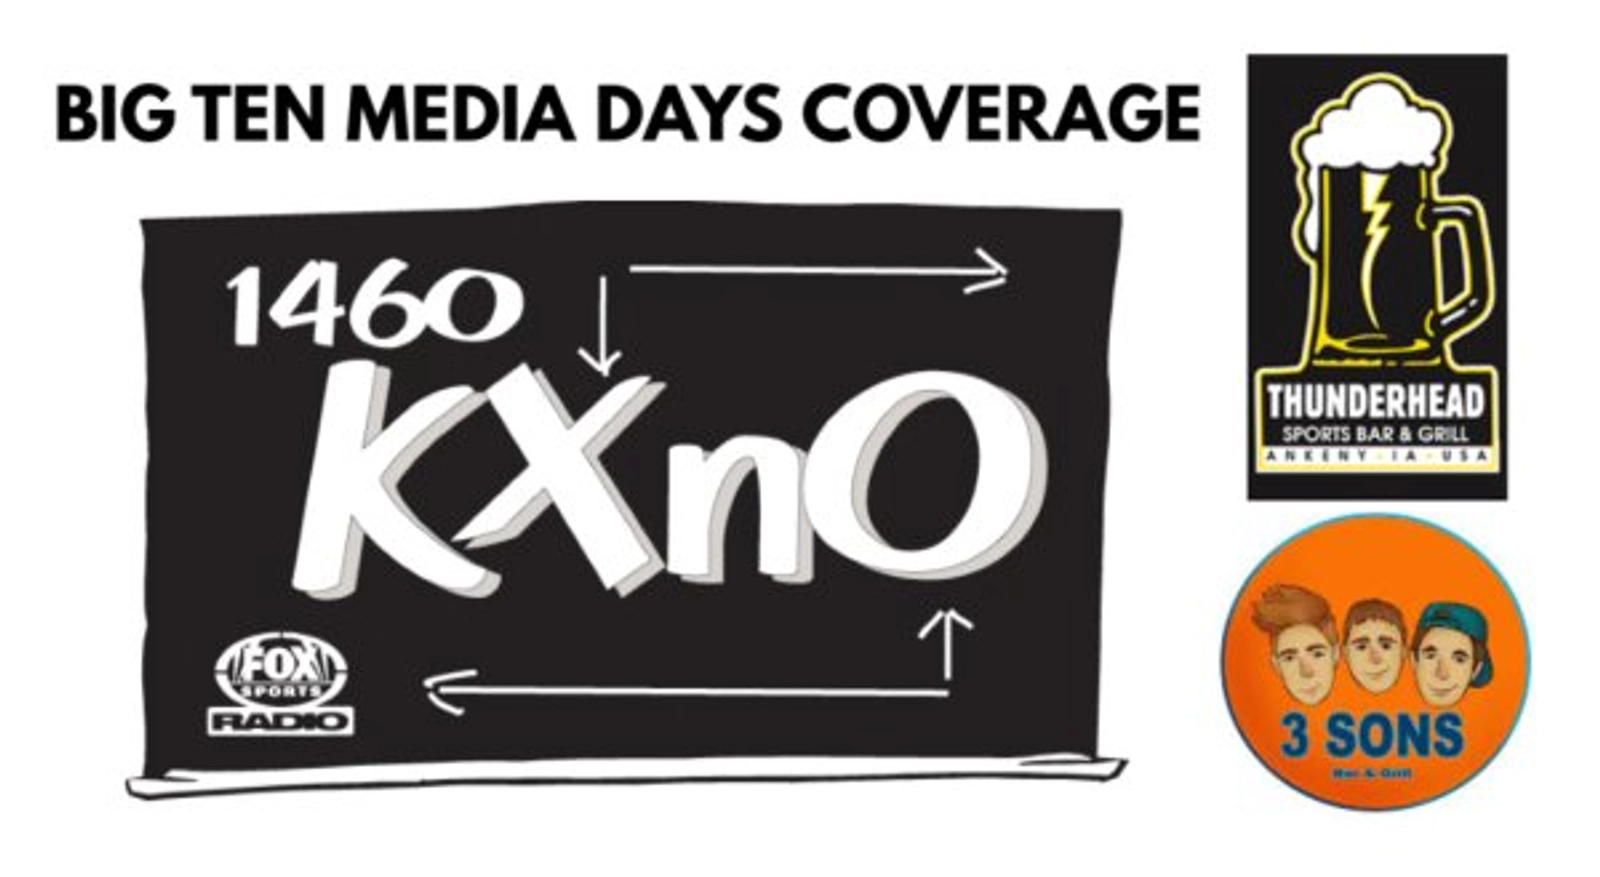 Big Ten Media Days Coverage - Thumbnail Image